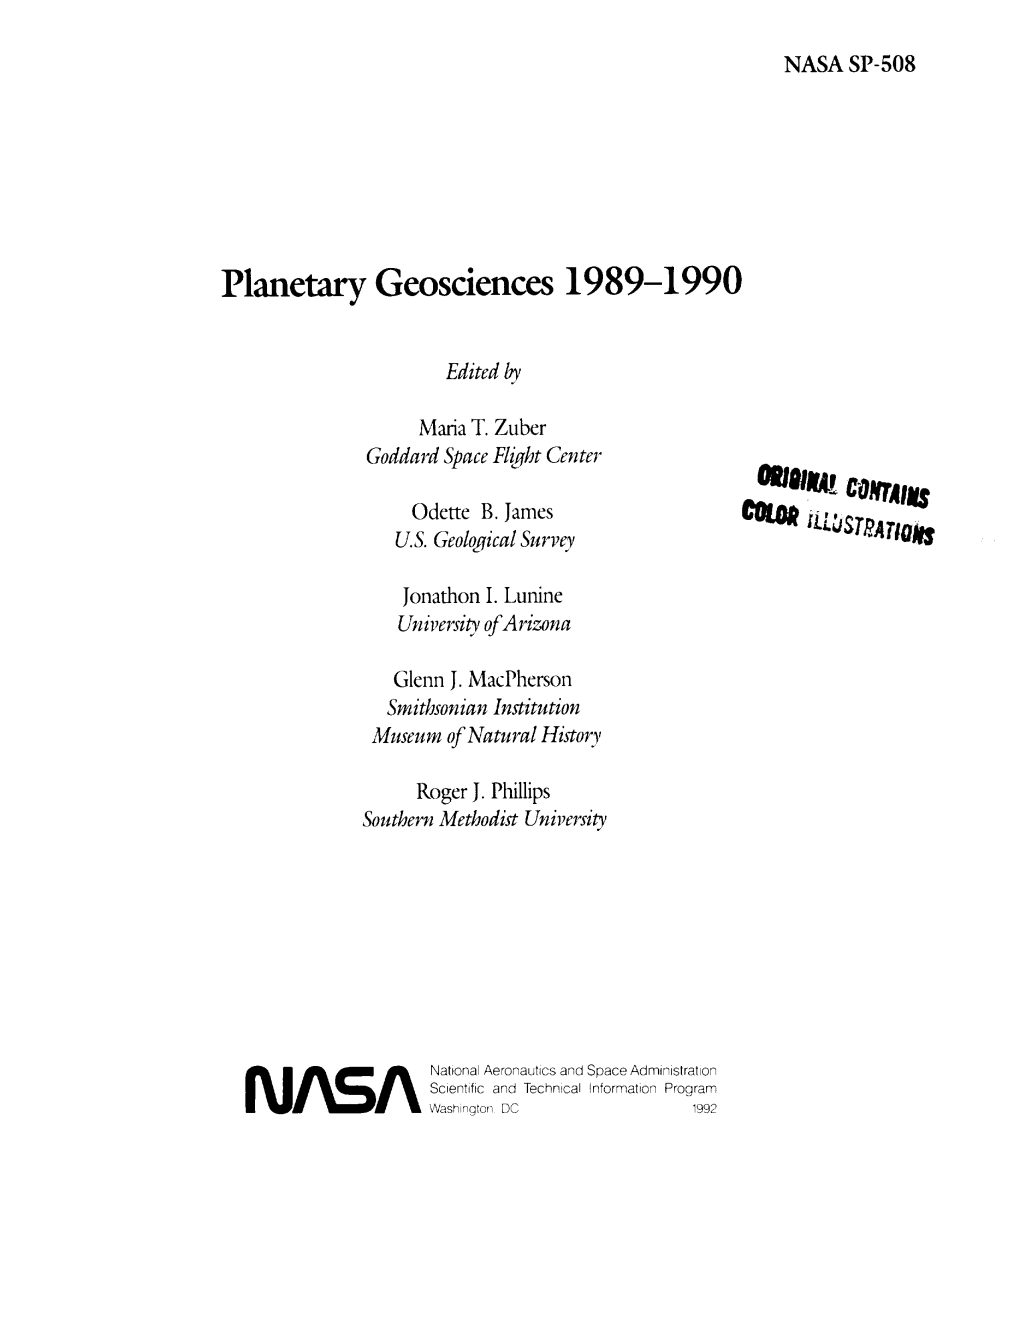 Planetary Geosciences 1989-1990